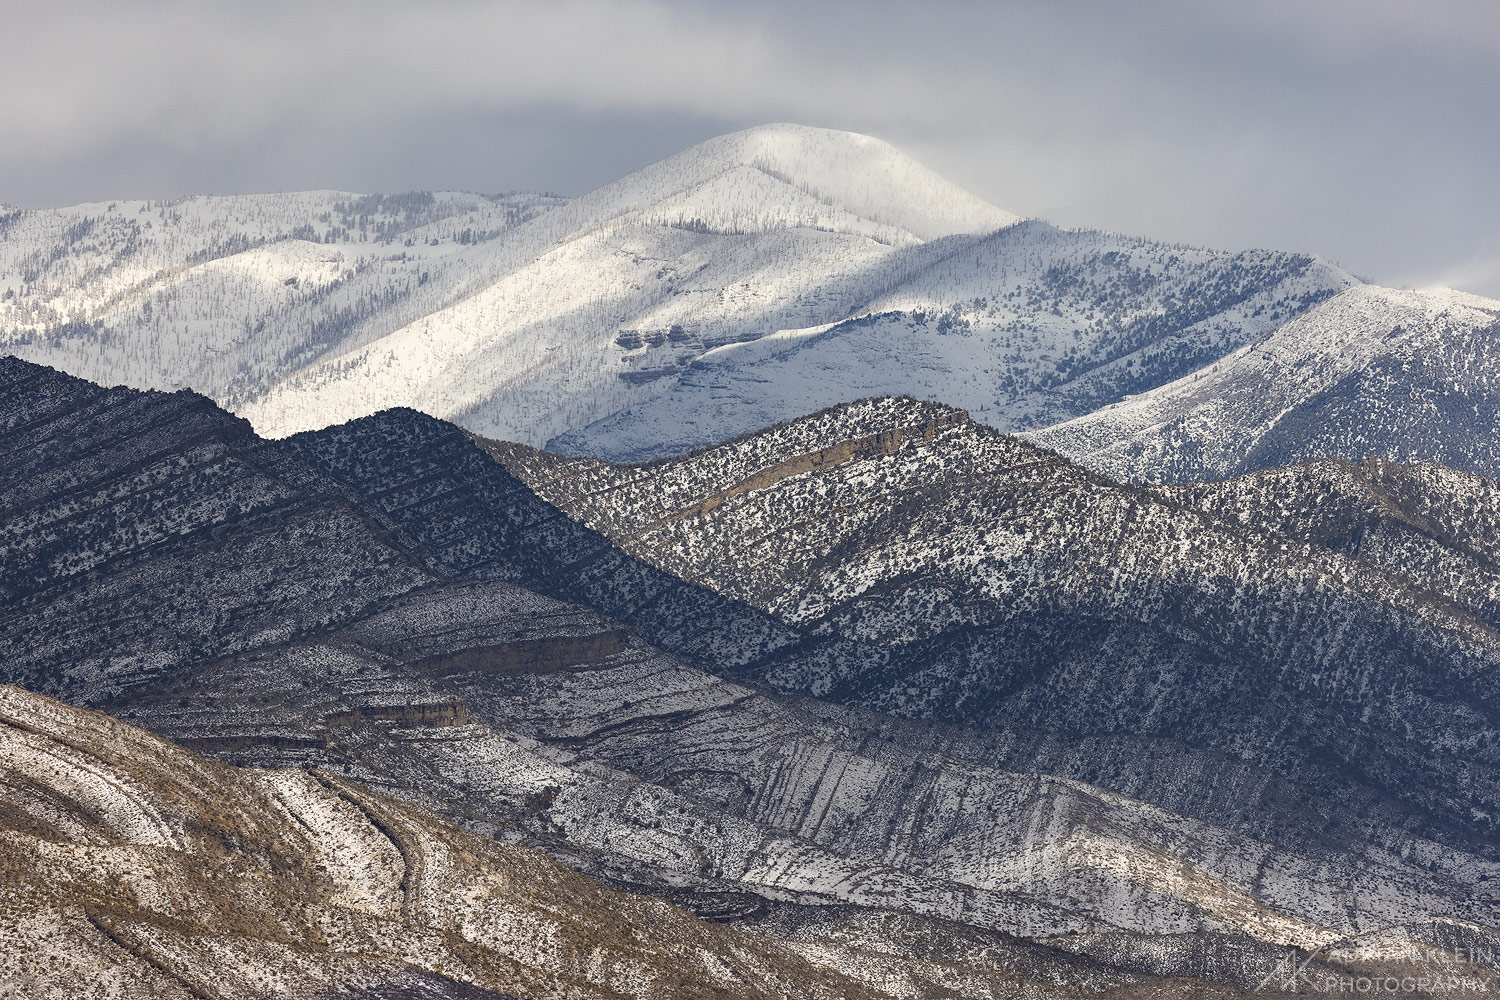 A rare desert snow storm blankets mountains outside Las Vegas, Nevada